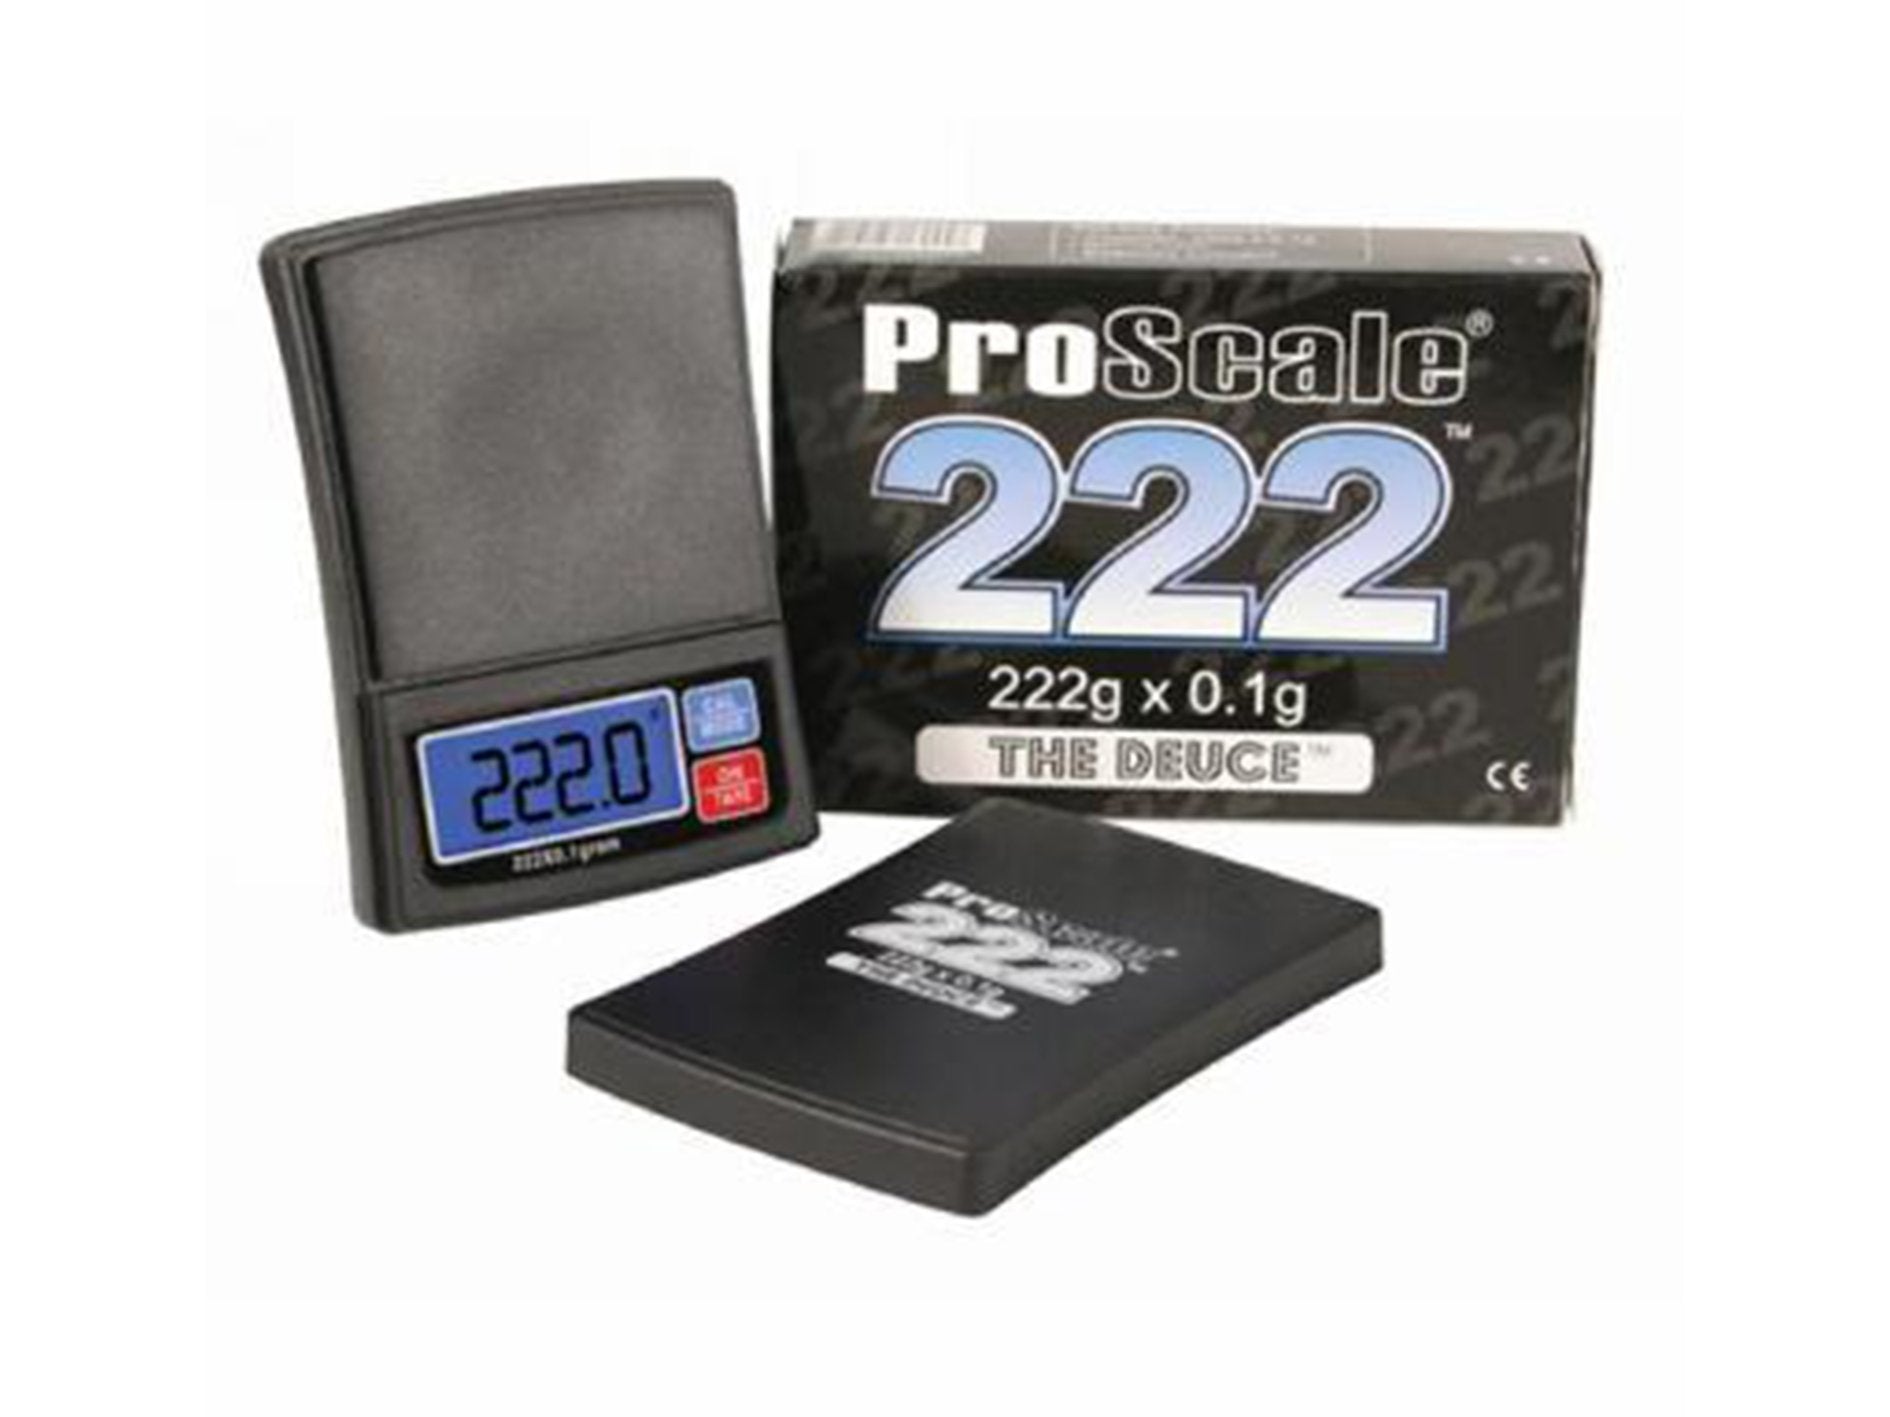 PROSCALE 222 g X 0.1g - VIR Wholesale